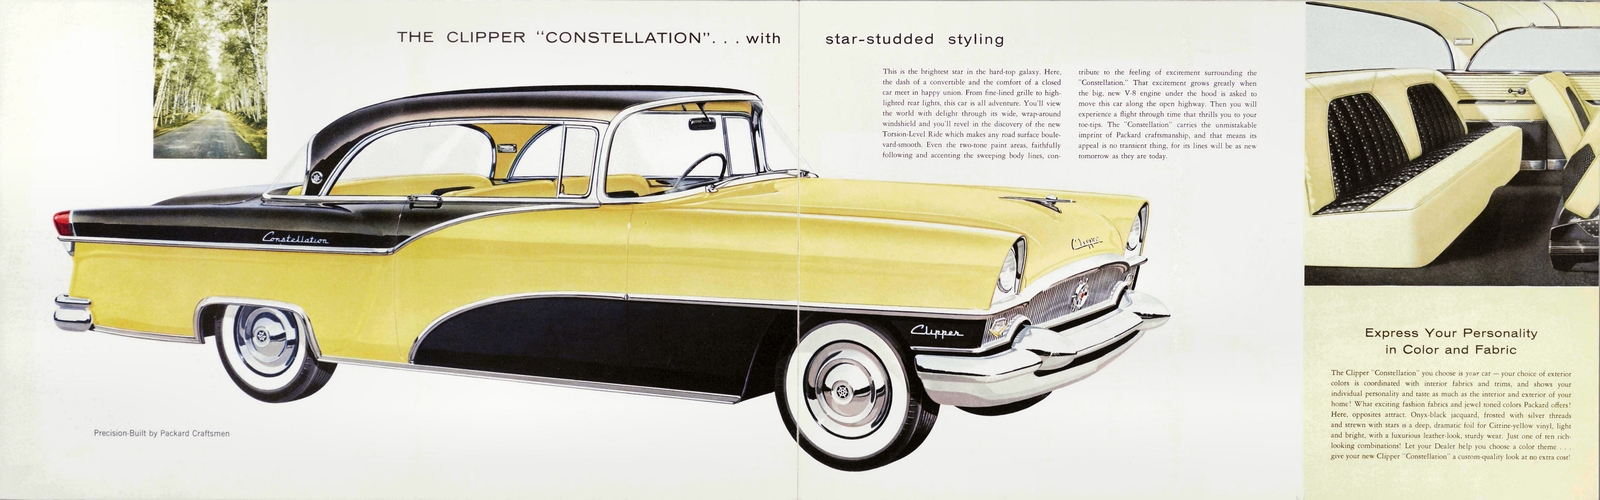 n_1955 Packard Clipper Prestige-04-05.jpg